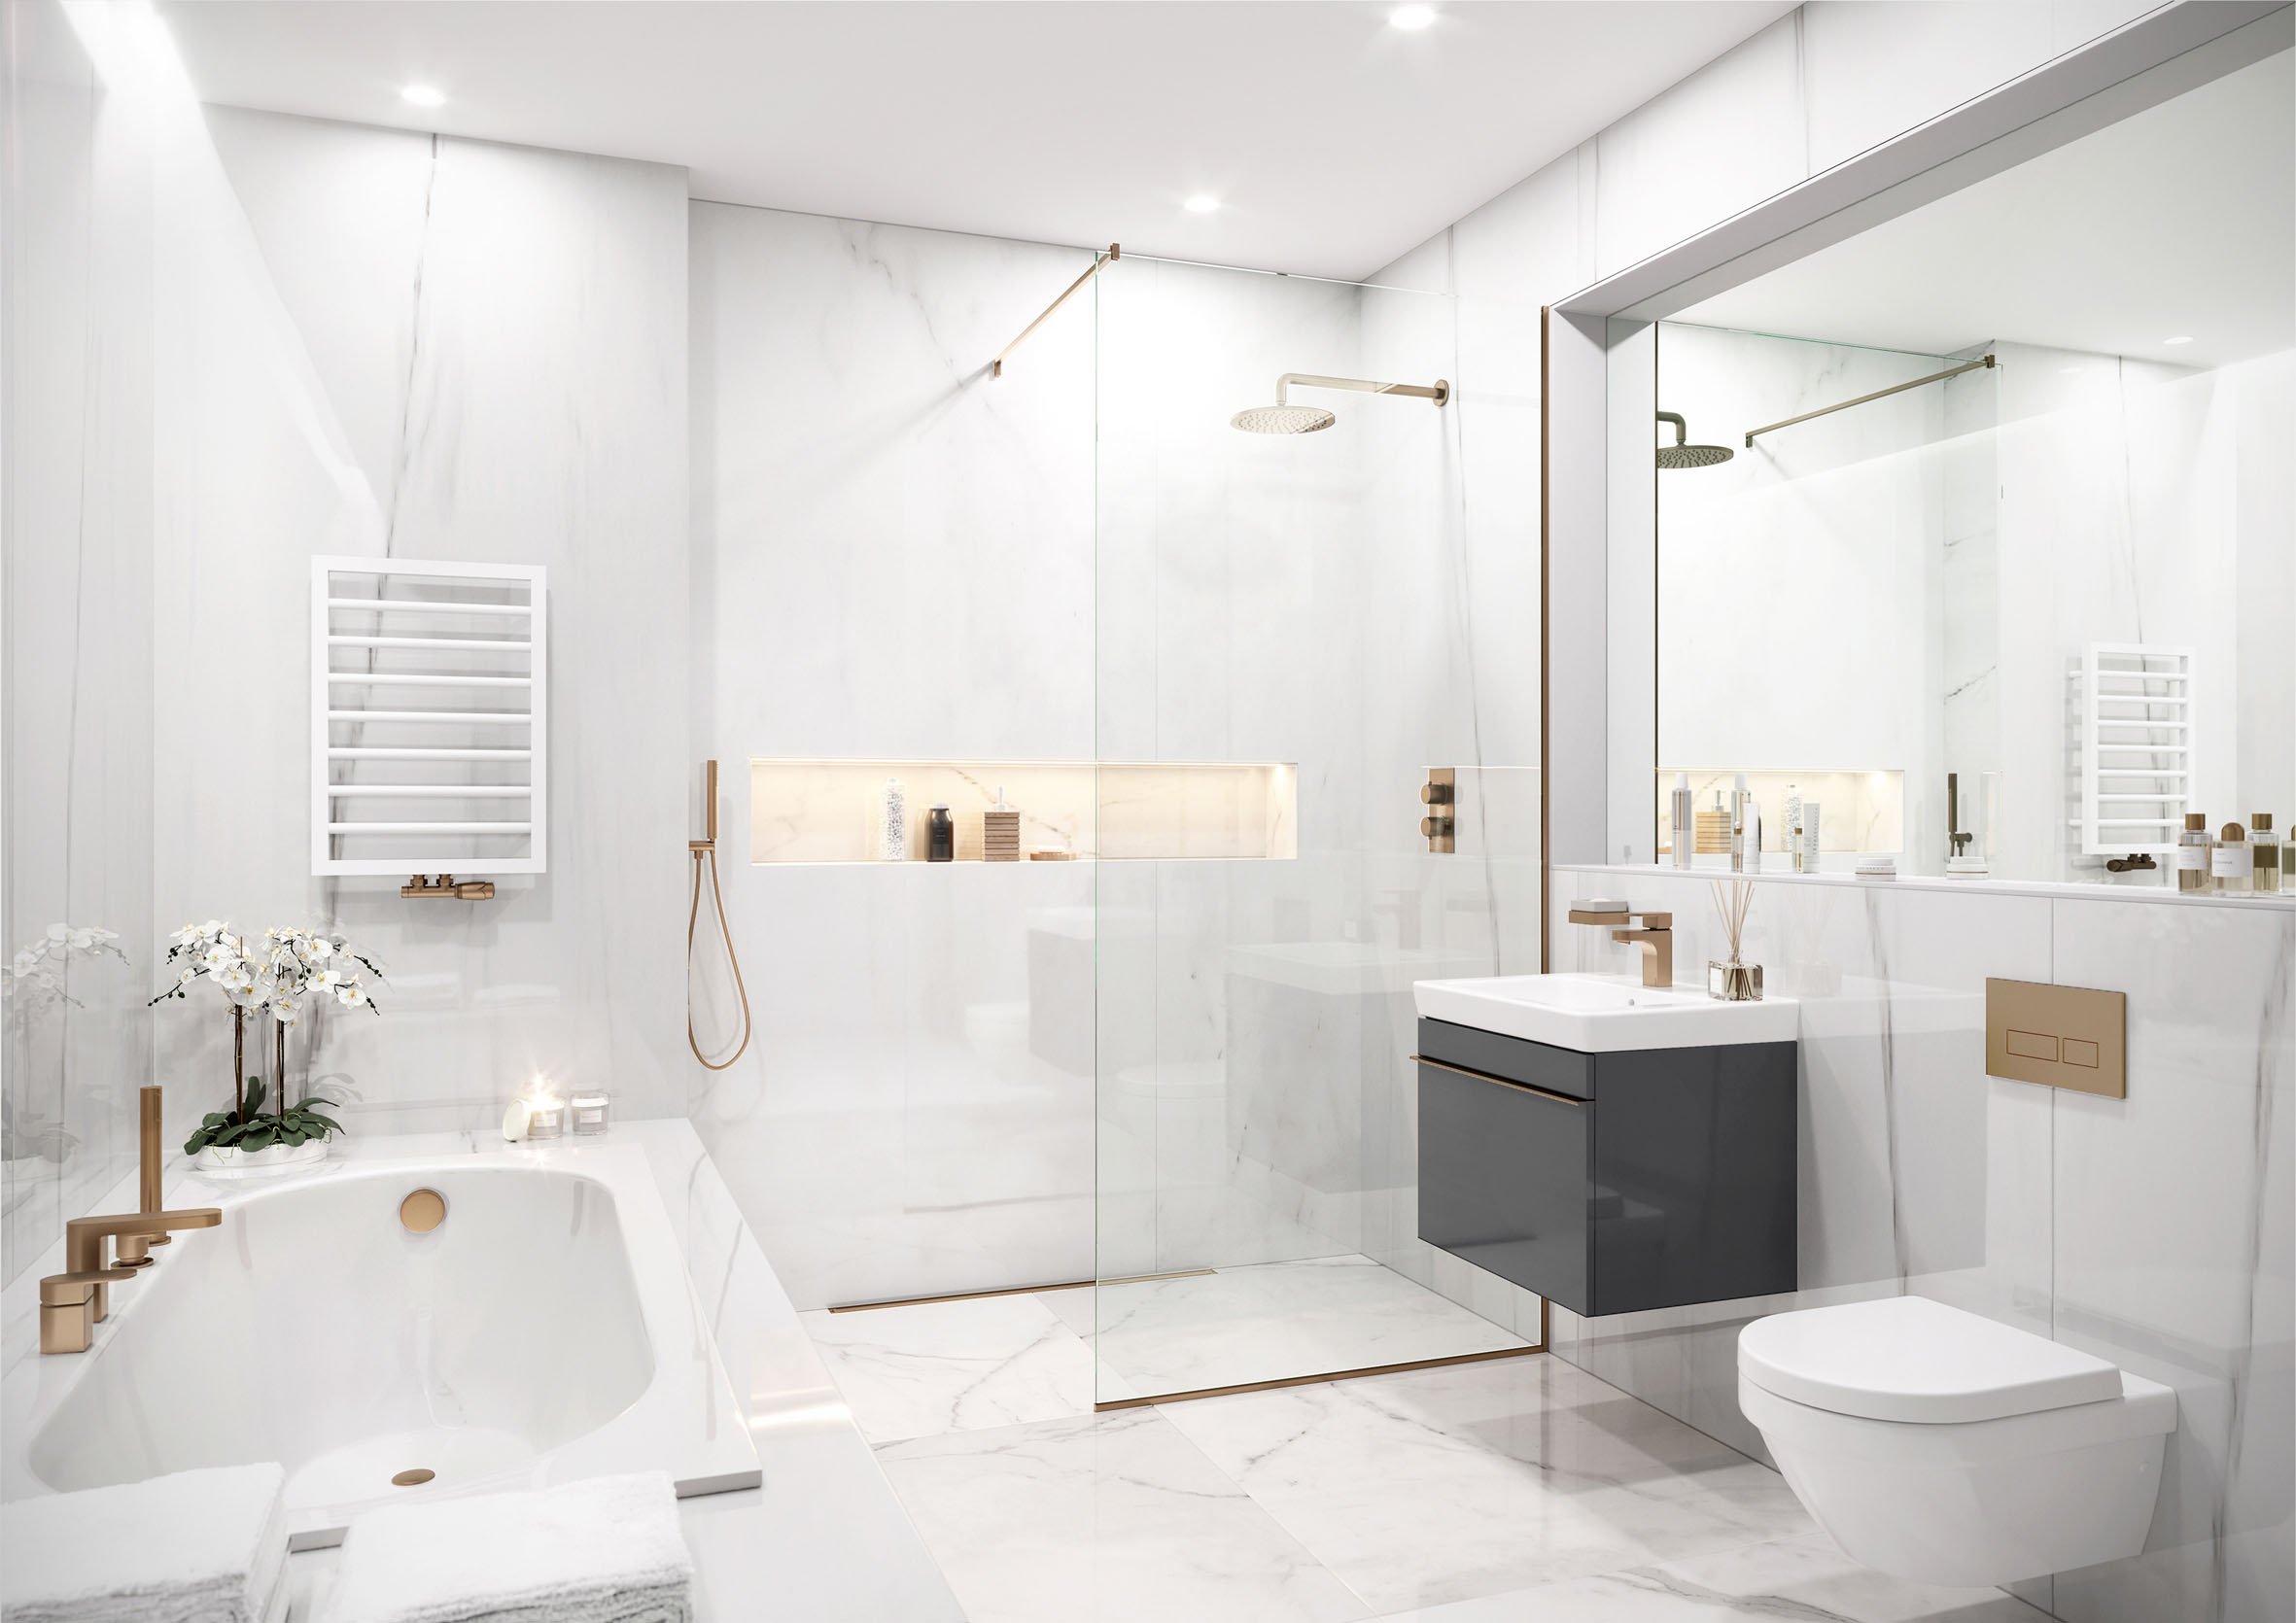 Design Ideas for a White Bathroom